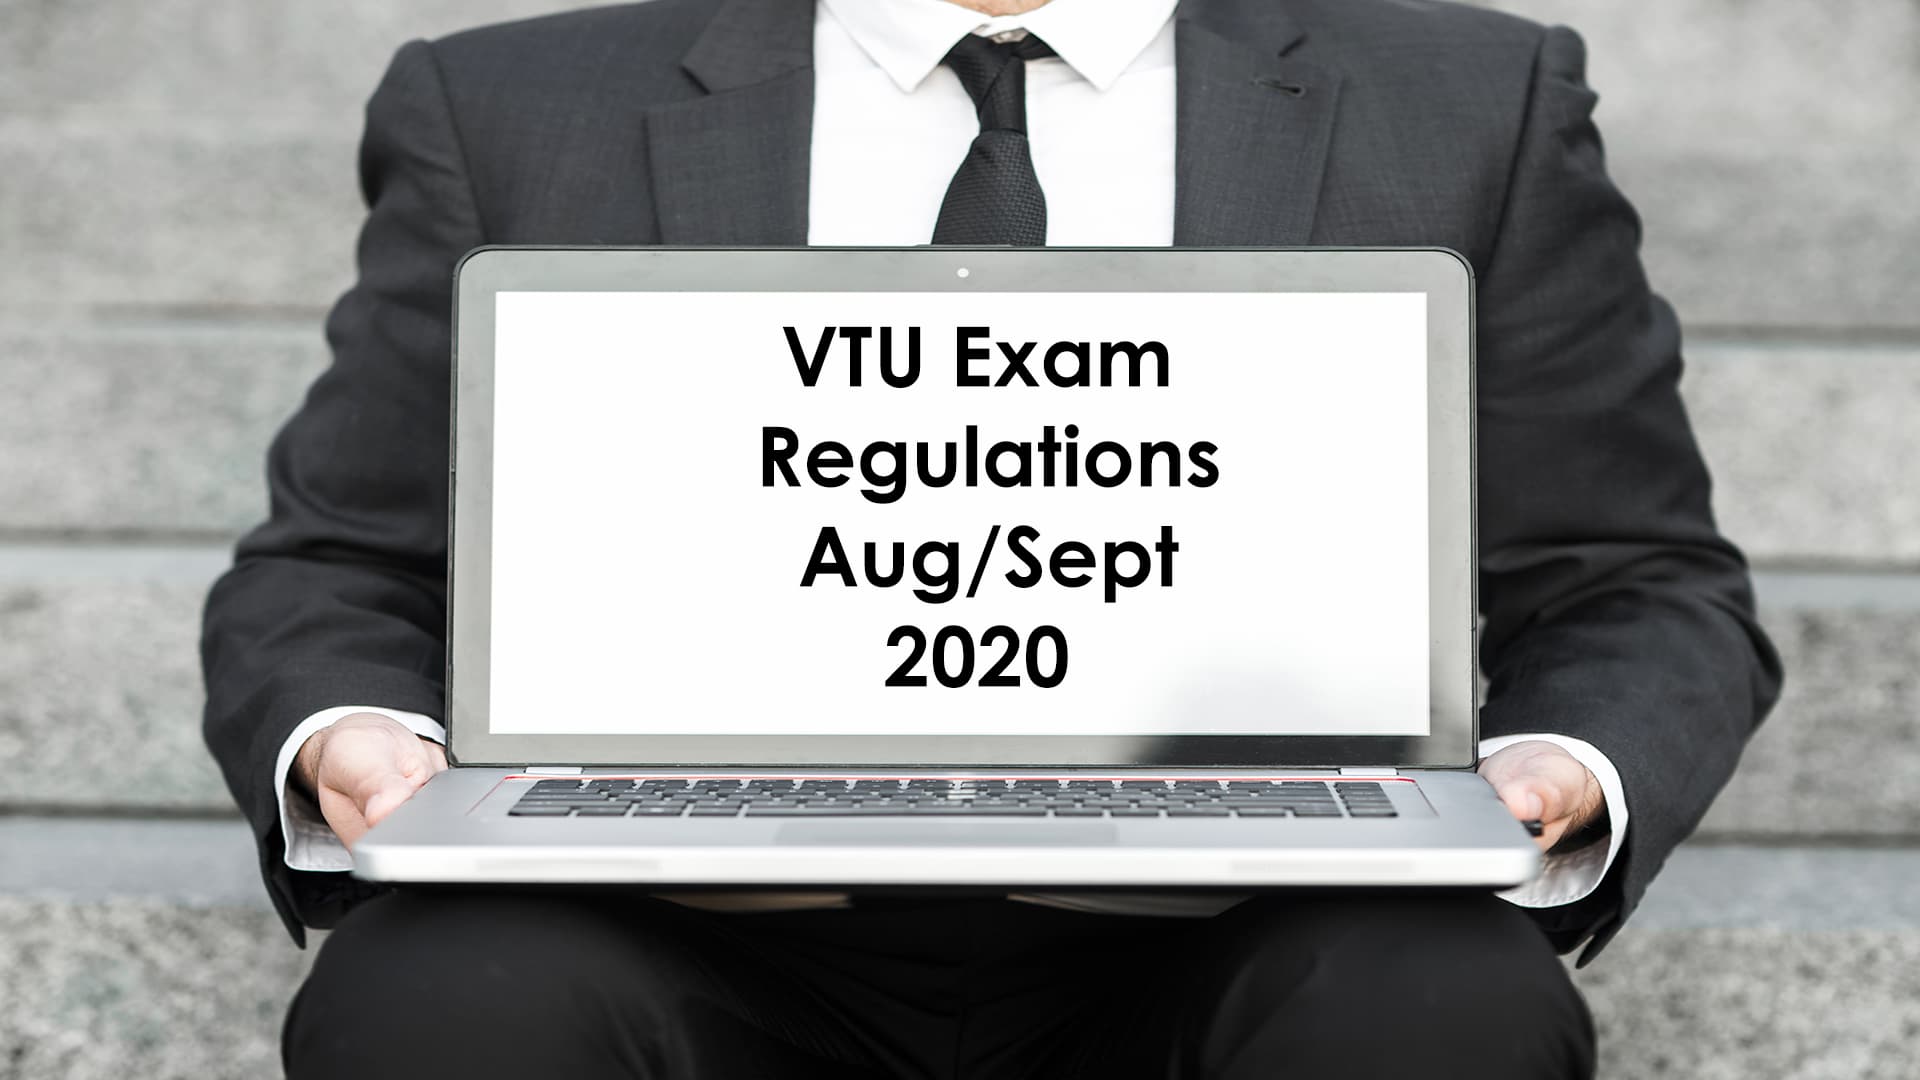 vtu phd rules and regulations 2020